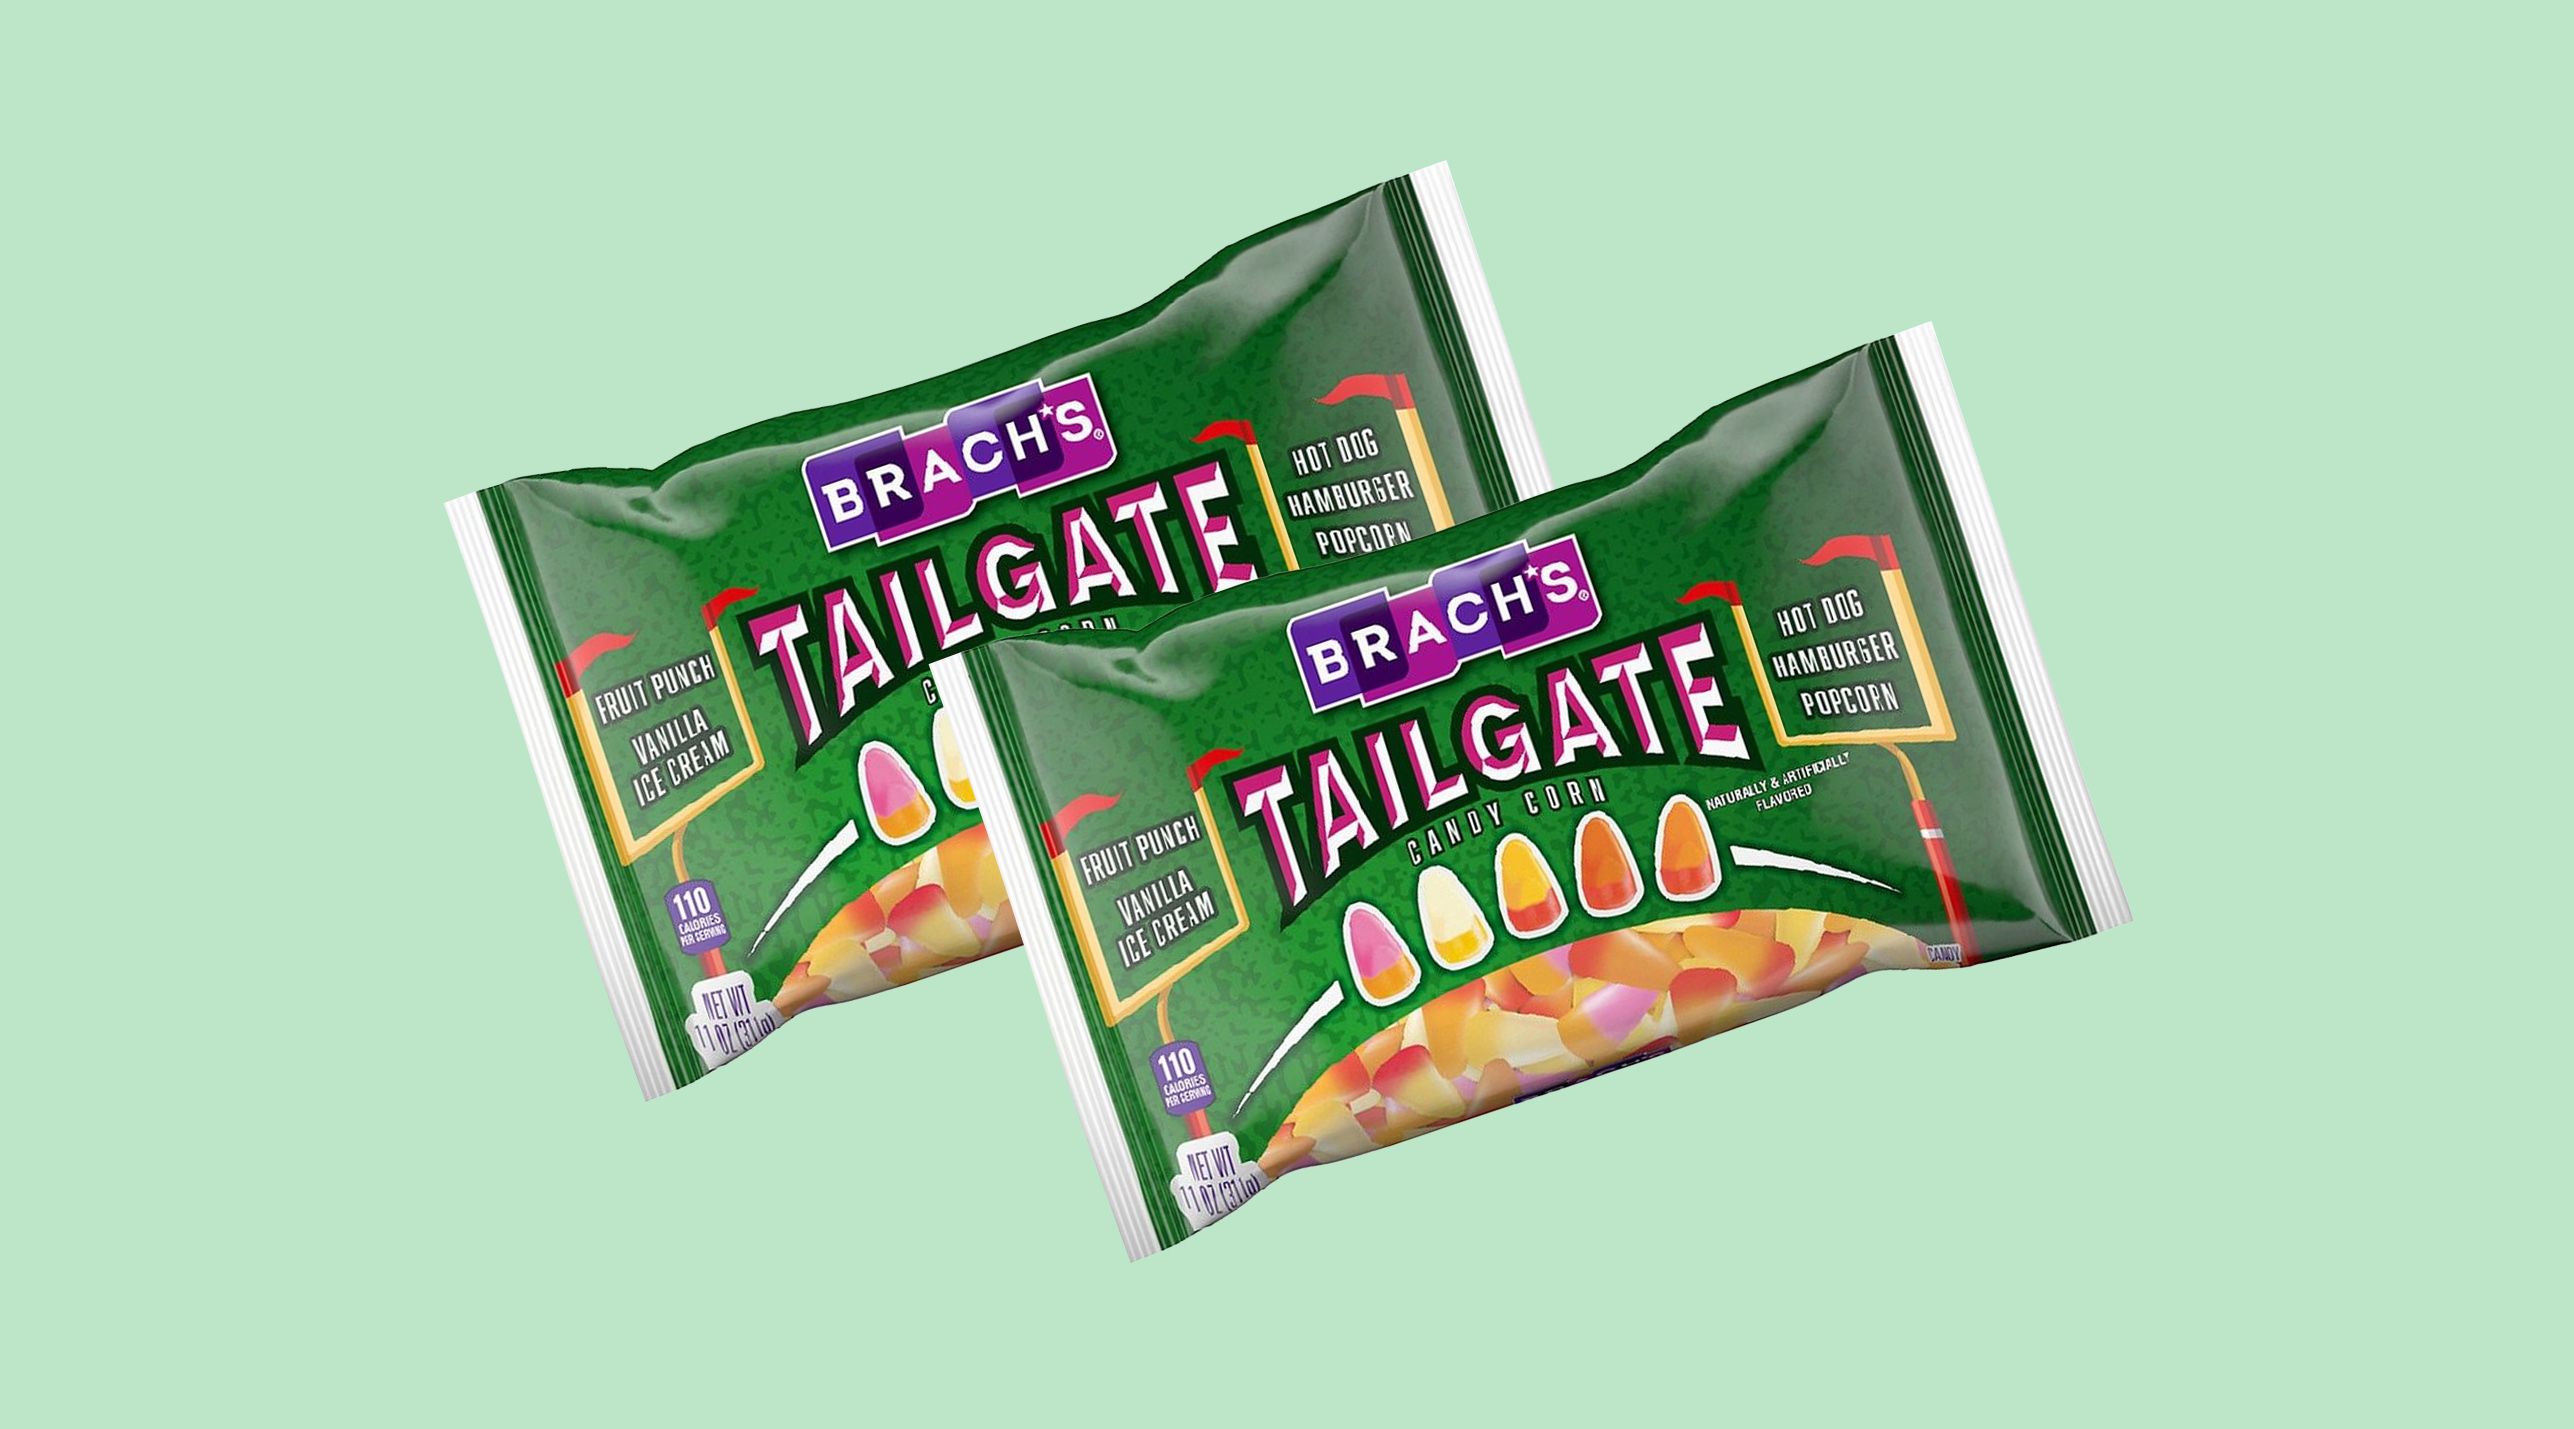 Tailgate Candy Corn review: I ate Brach's hot dog, hamburger